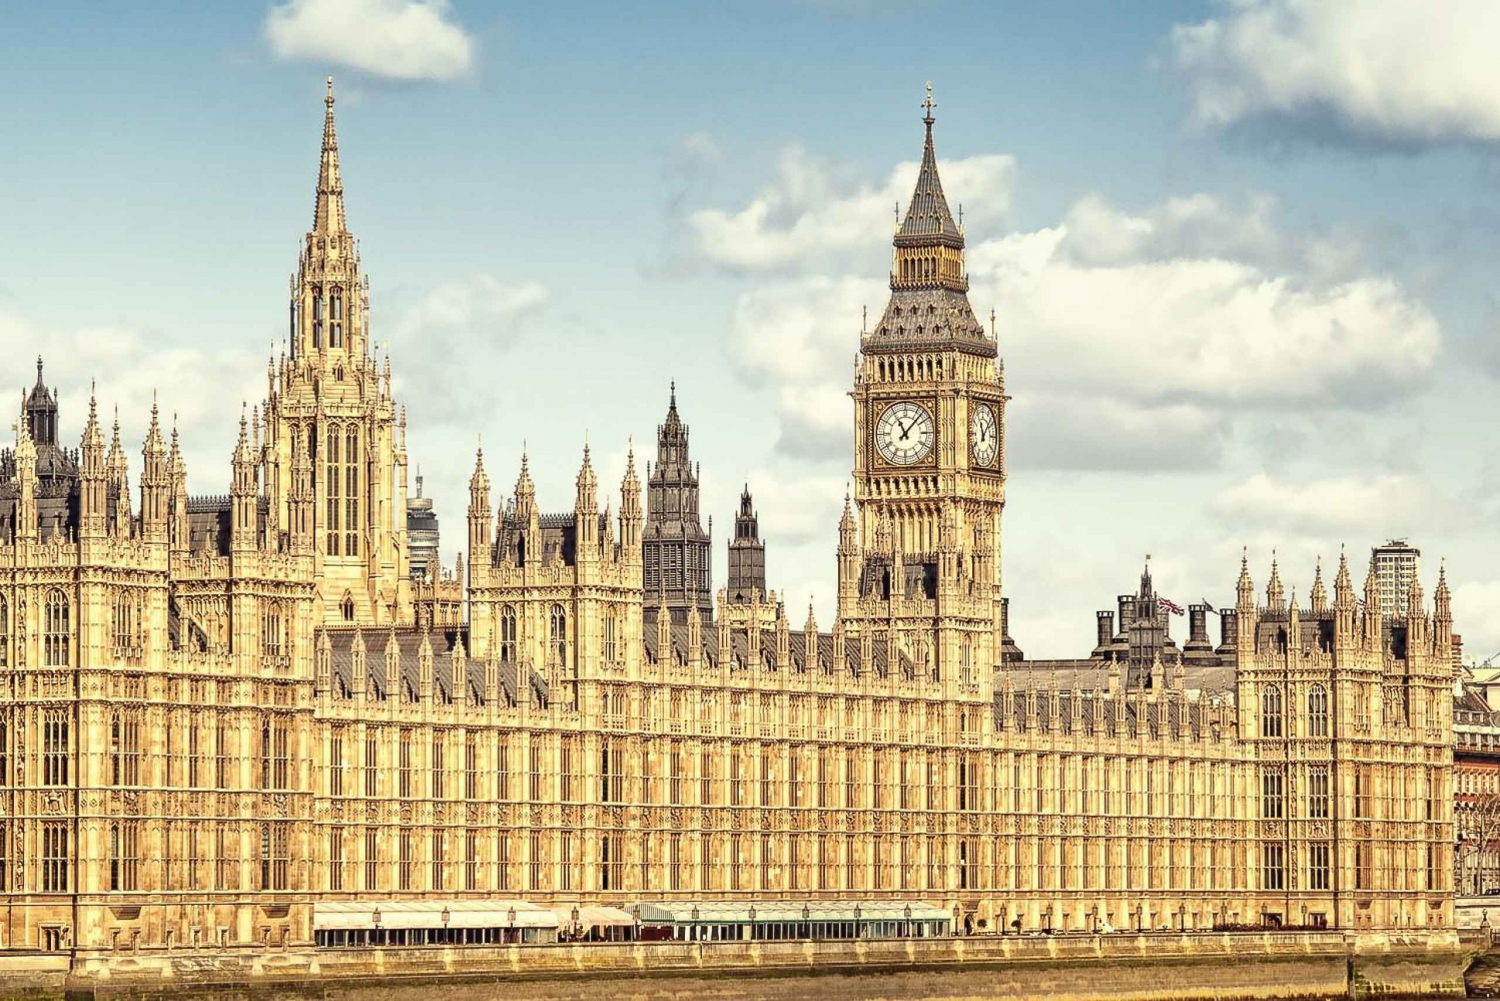 Lontoo: Westminsterin kierros, jokiristeily ja Lontoon torni.